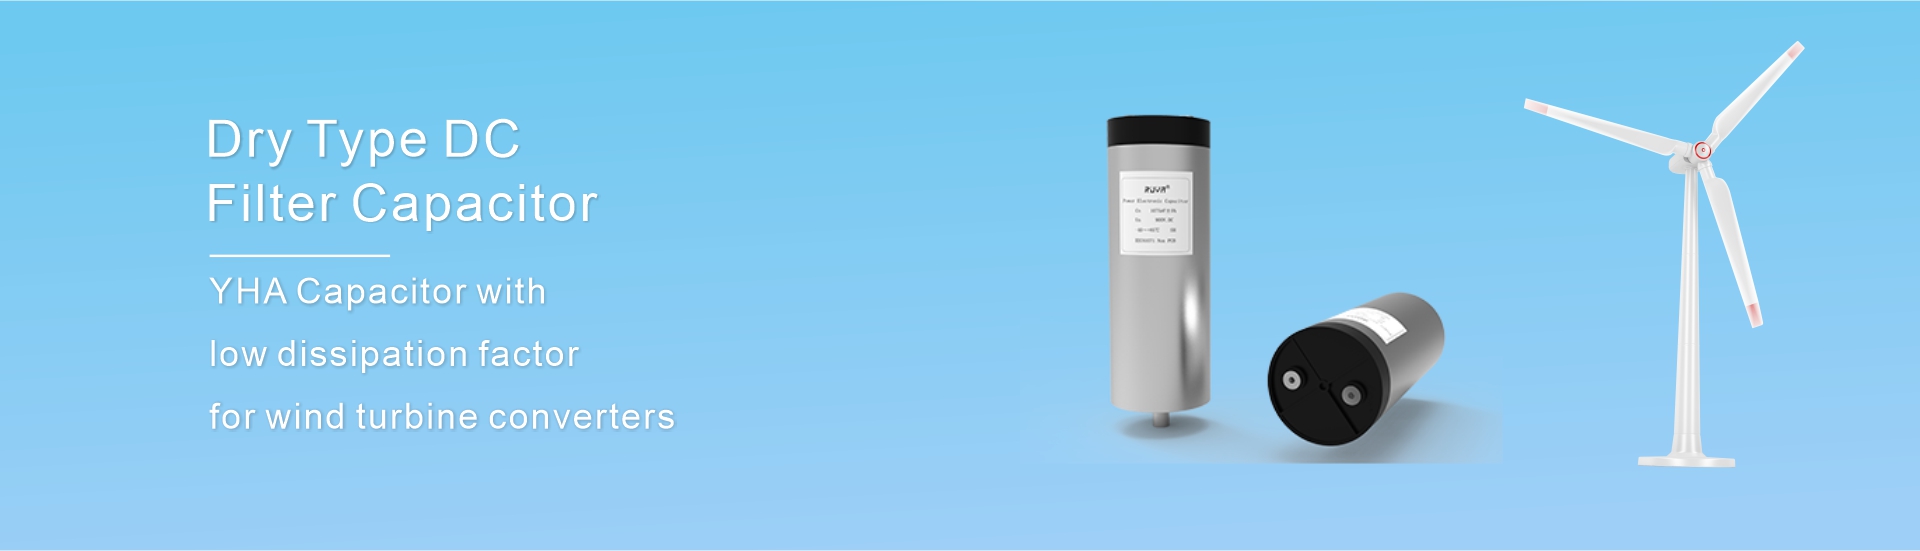 Condensador de filtro de CC de tipo seco YHA con lata de aluminio